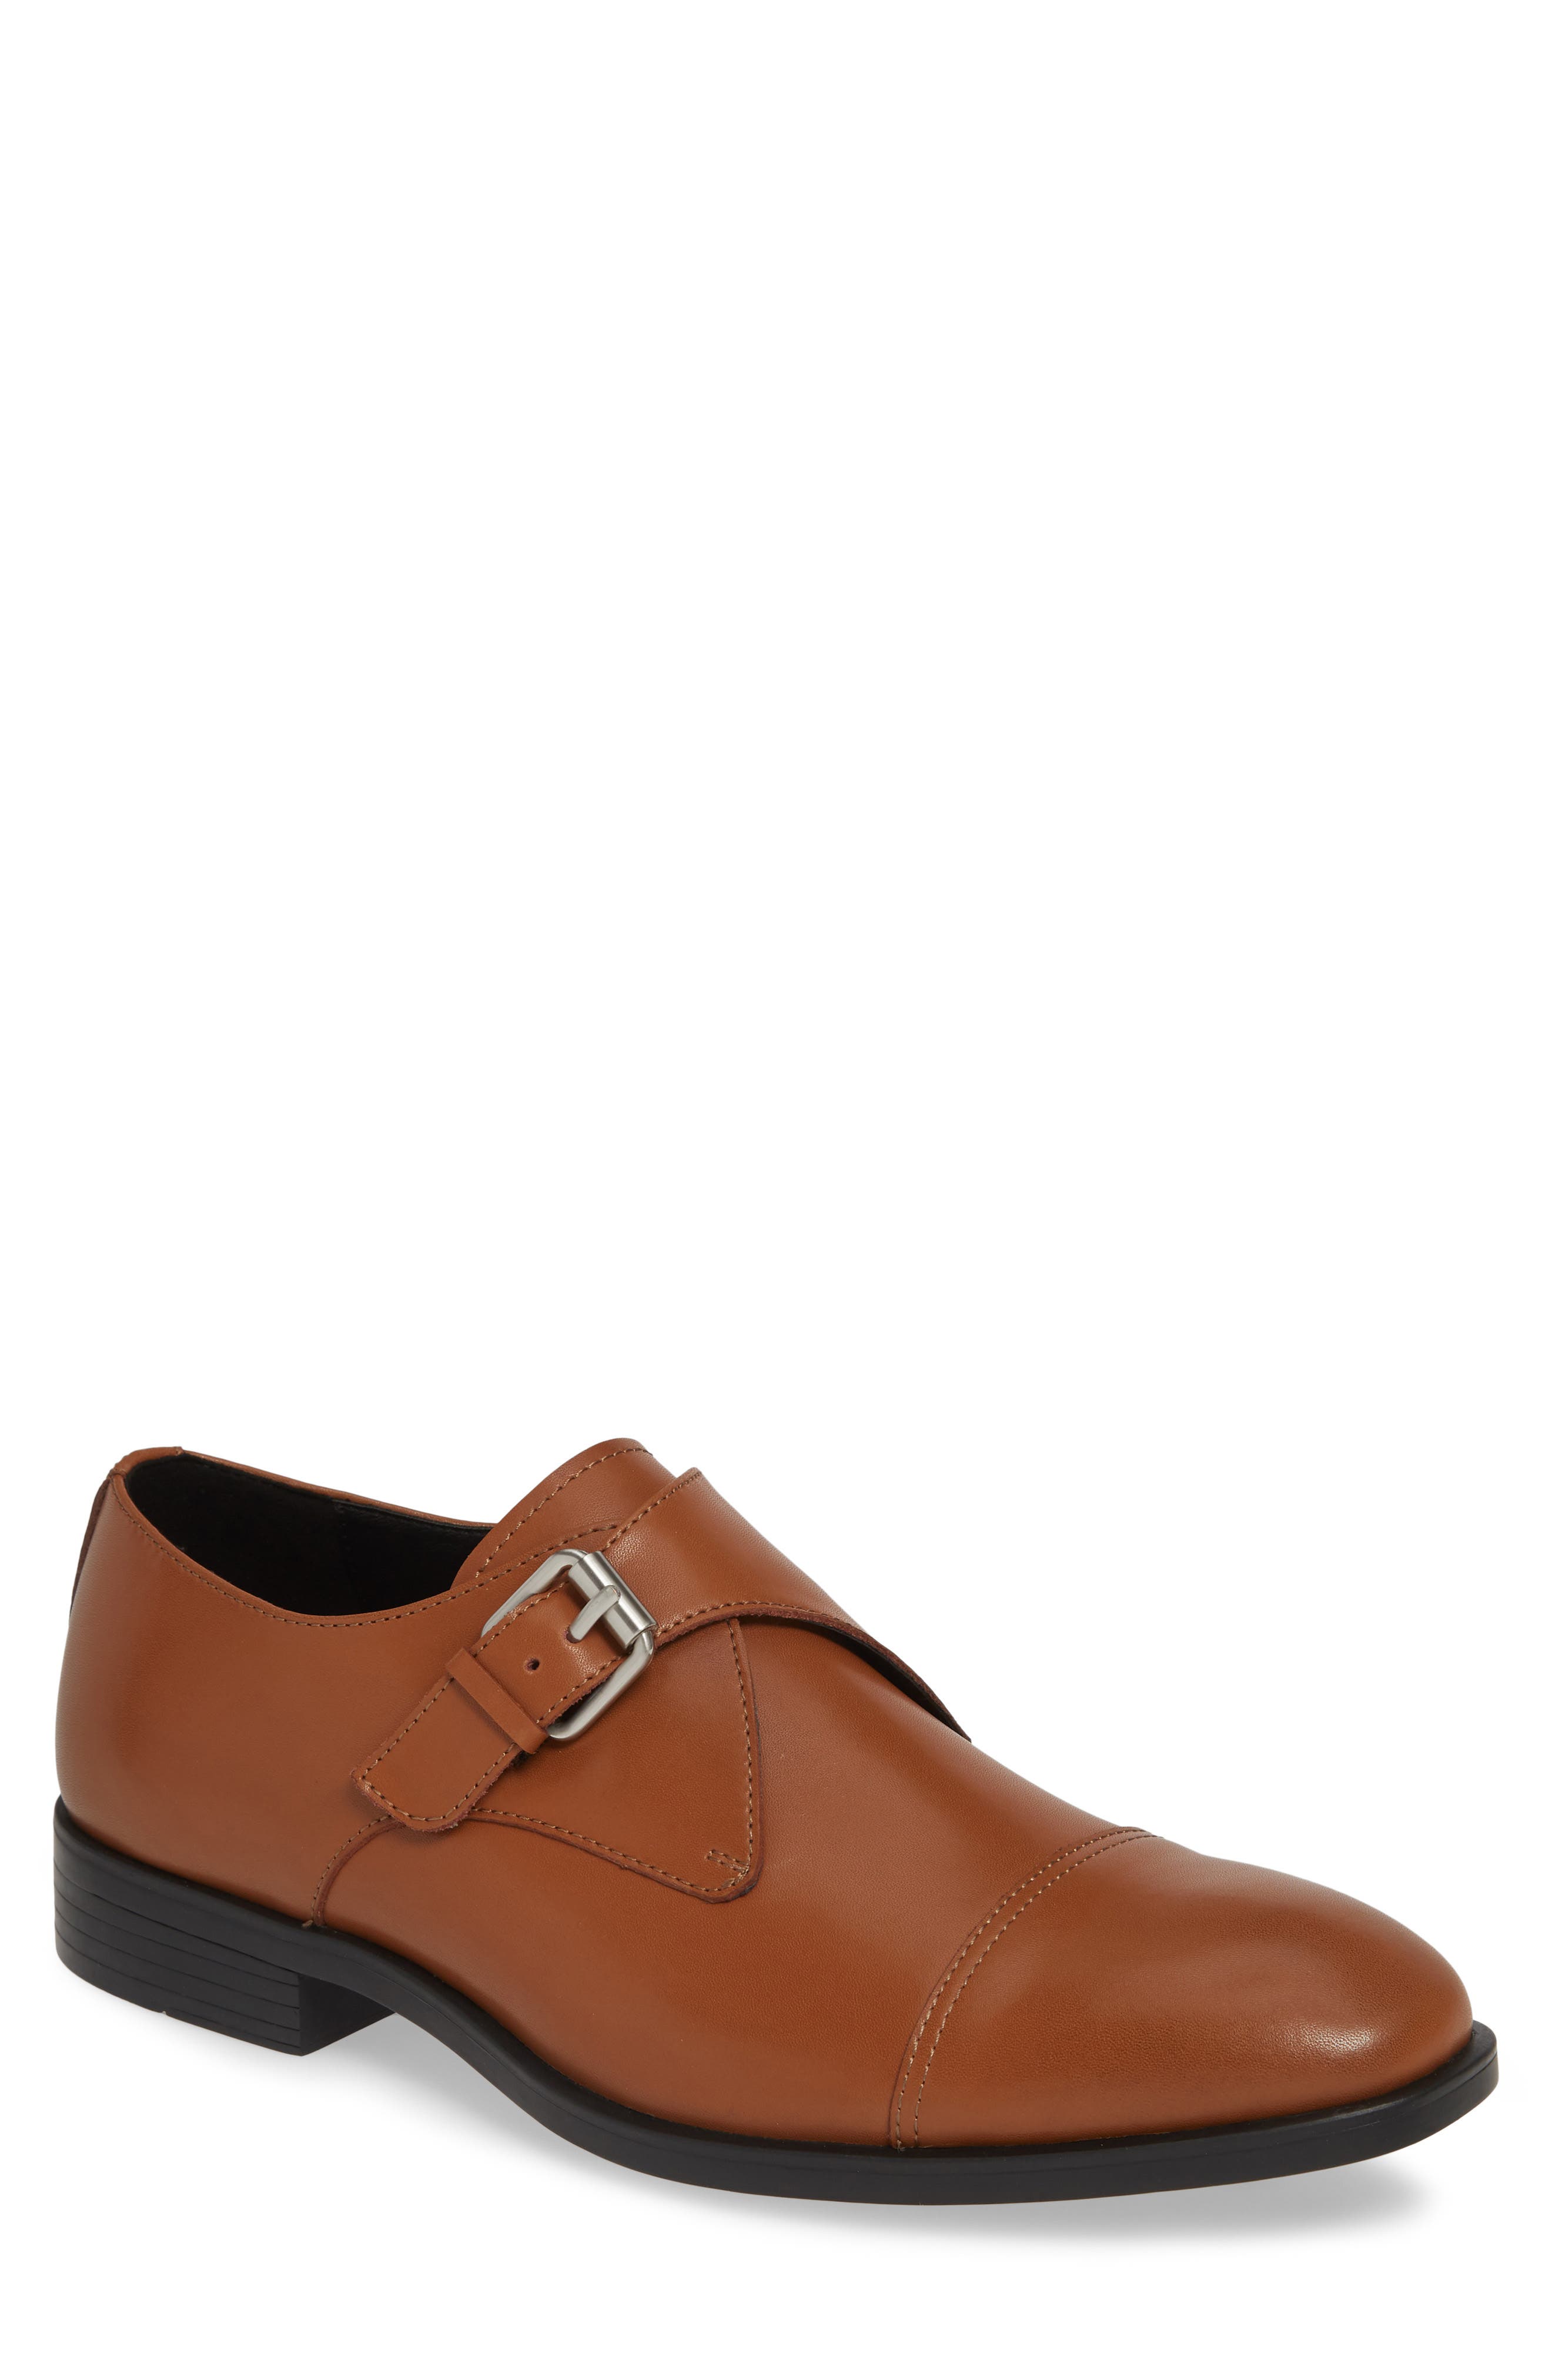 UPC 192675341097 product image for Men's Calvin Klein Channer Monk Strap Shoe, Size 10.5 M - Brown | upcitemdb.com